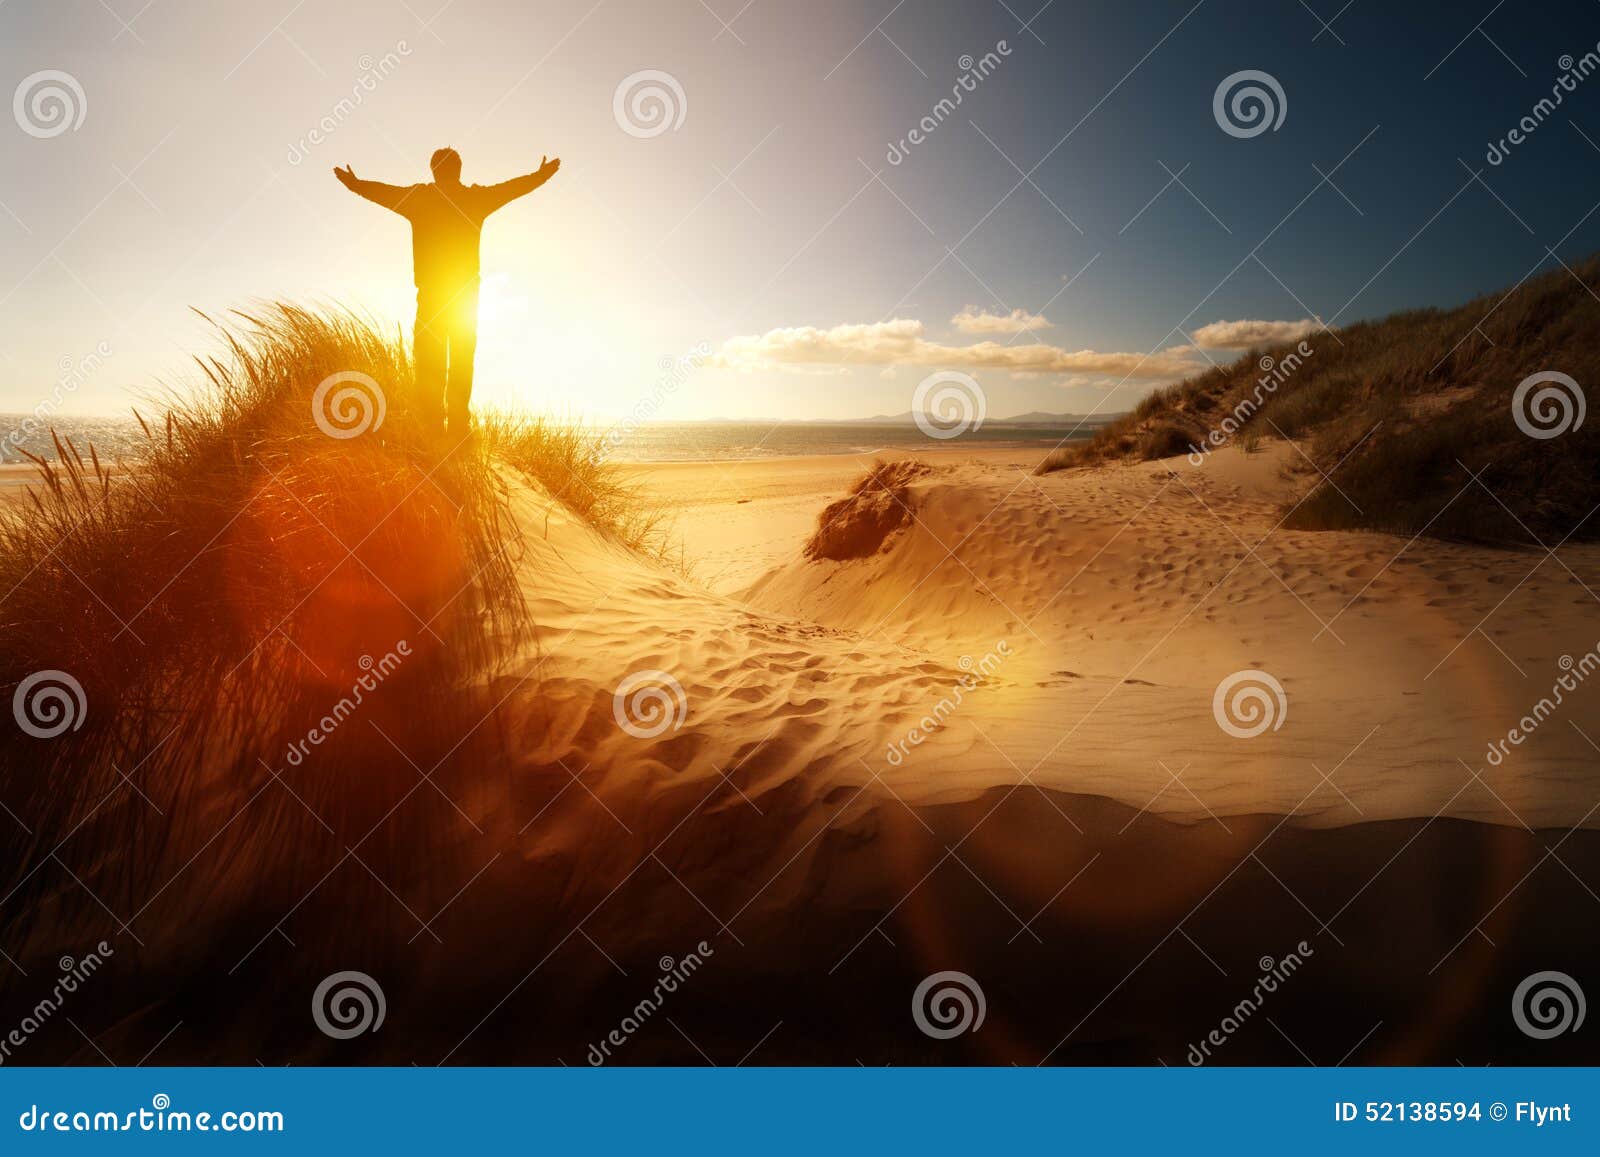 worship and praise on a beach